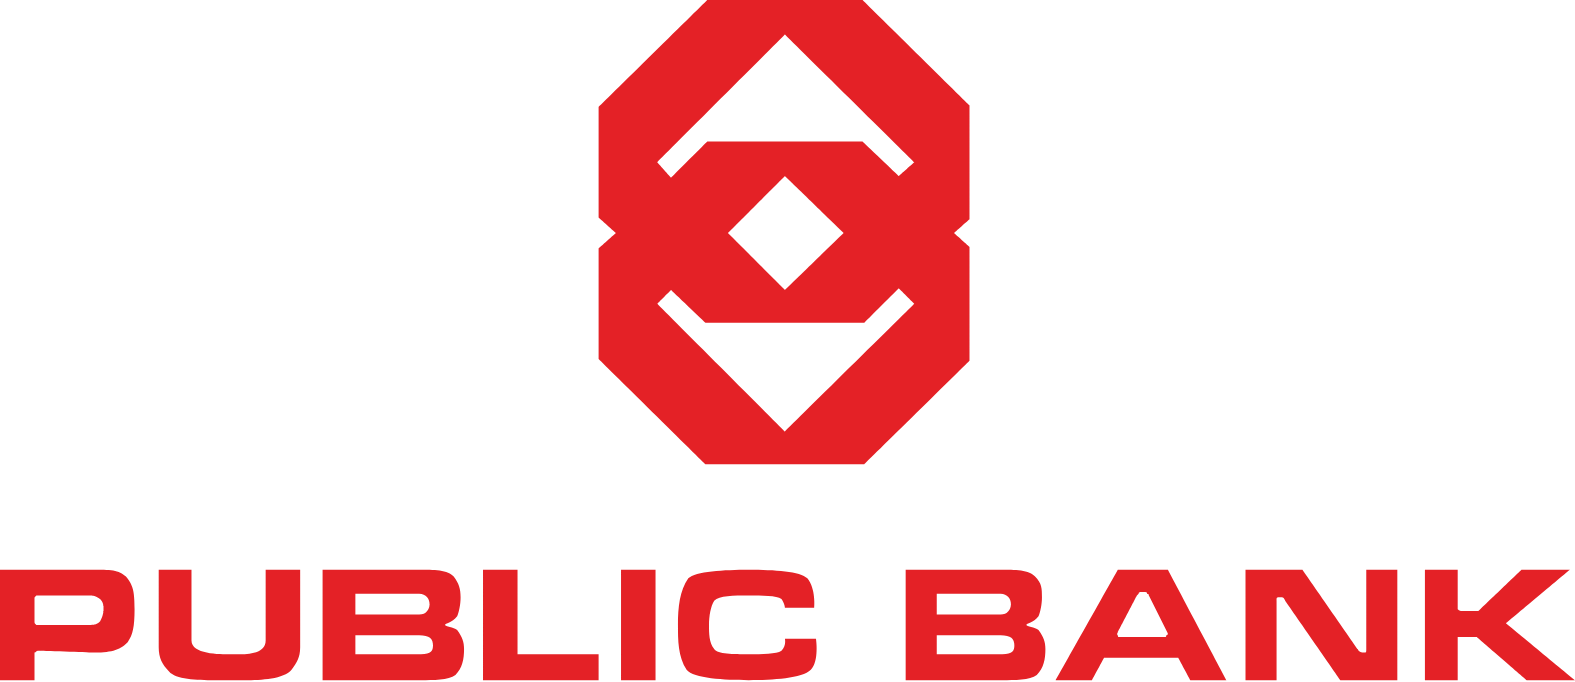 PBBank (Public Bank Bhd) logo large (transparent PNG)